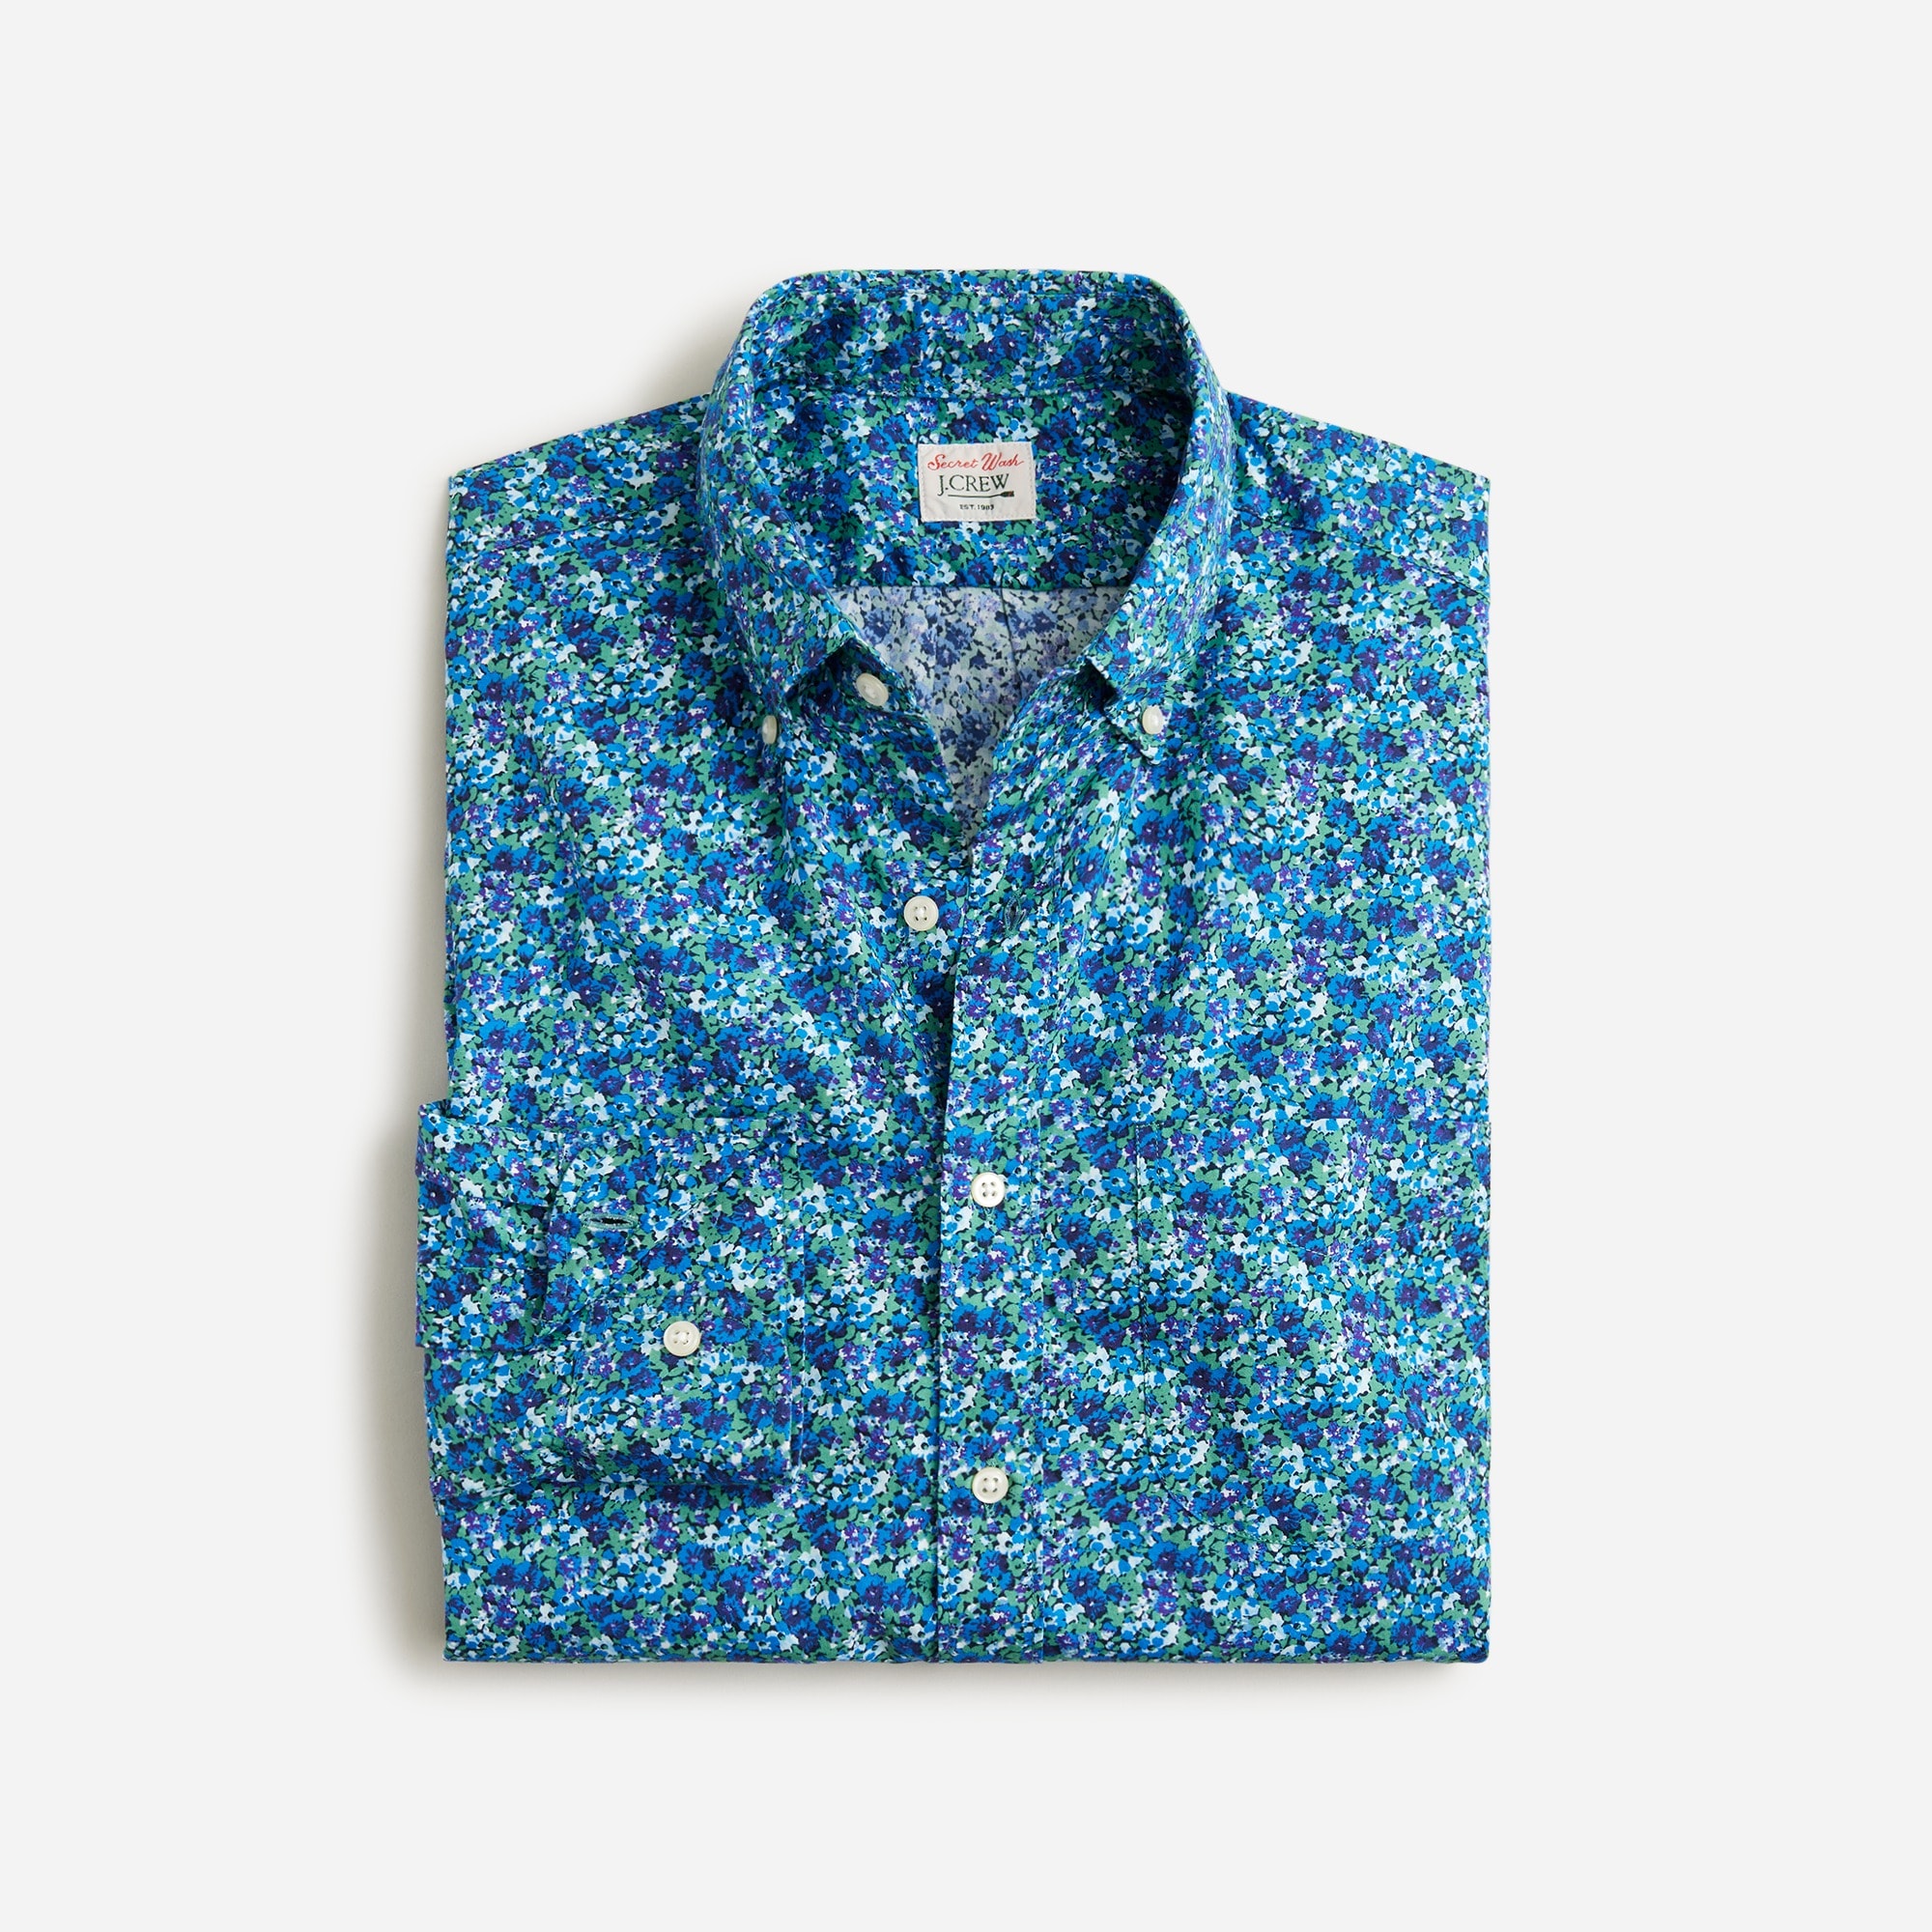  Relaxed Secret Wash cotton poplin shirt in print